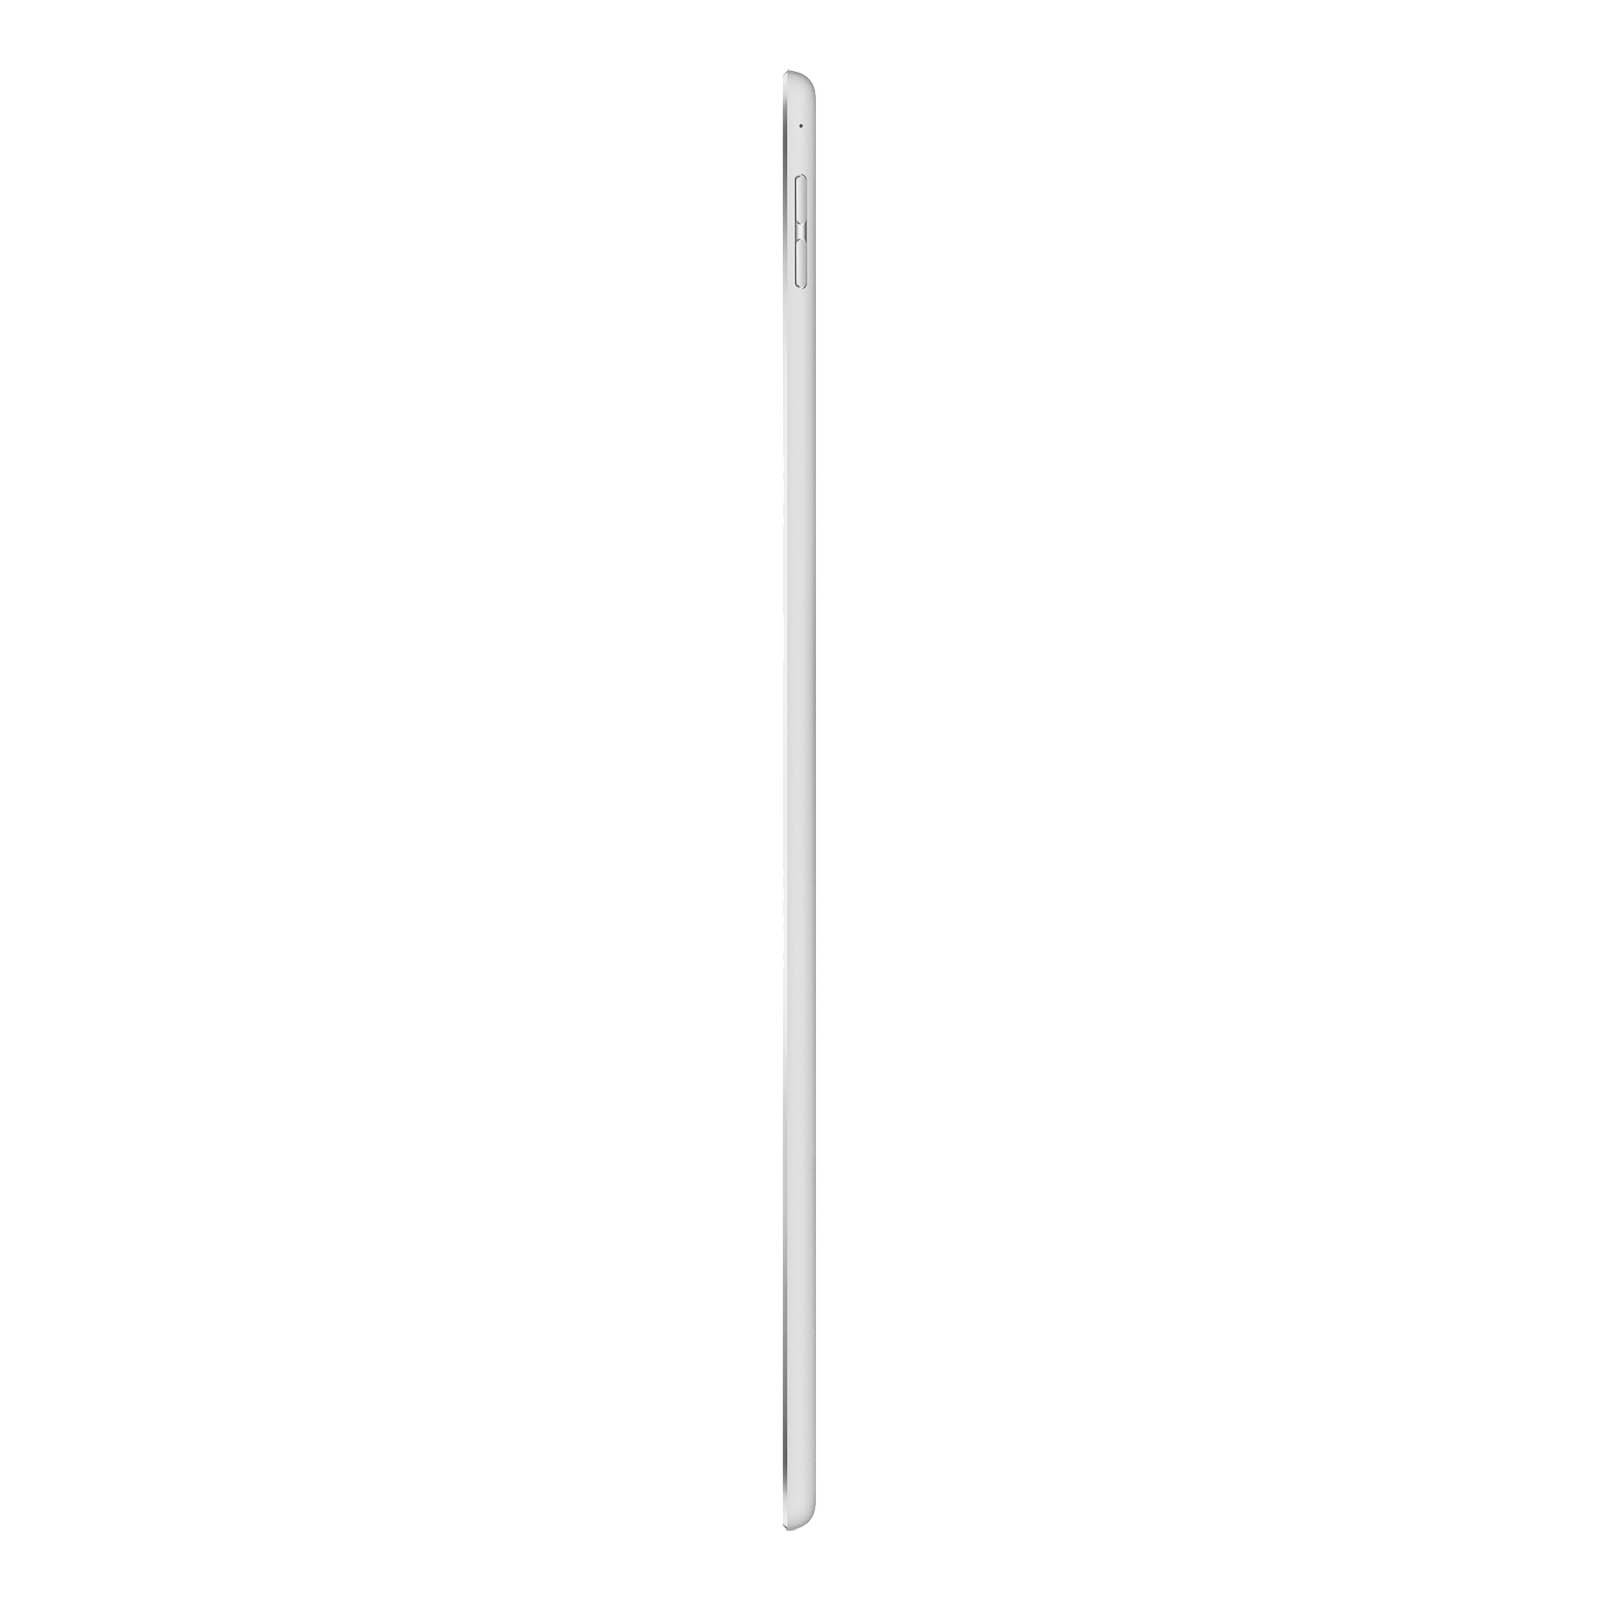 iPad Pro 12.9 Inch 1st Gen 128GB Silver Pristine - Unlocked